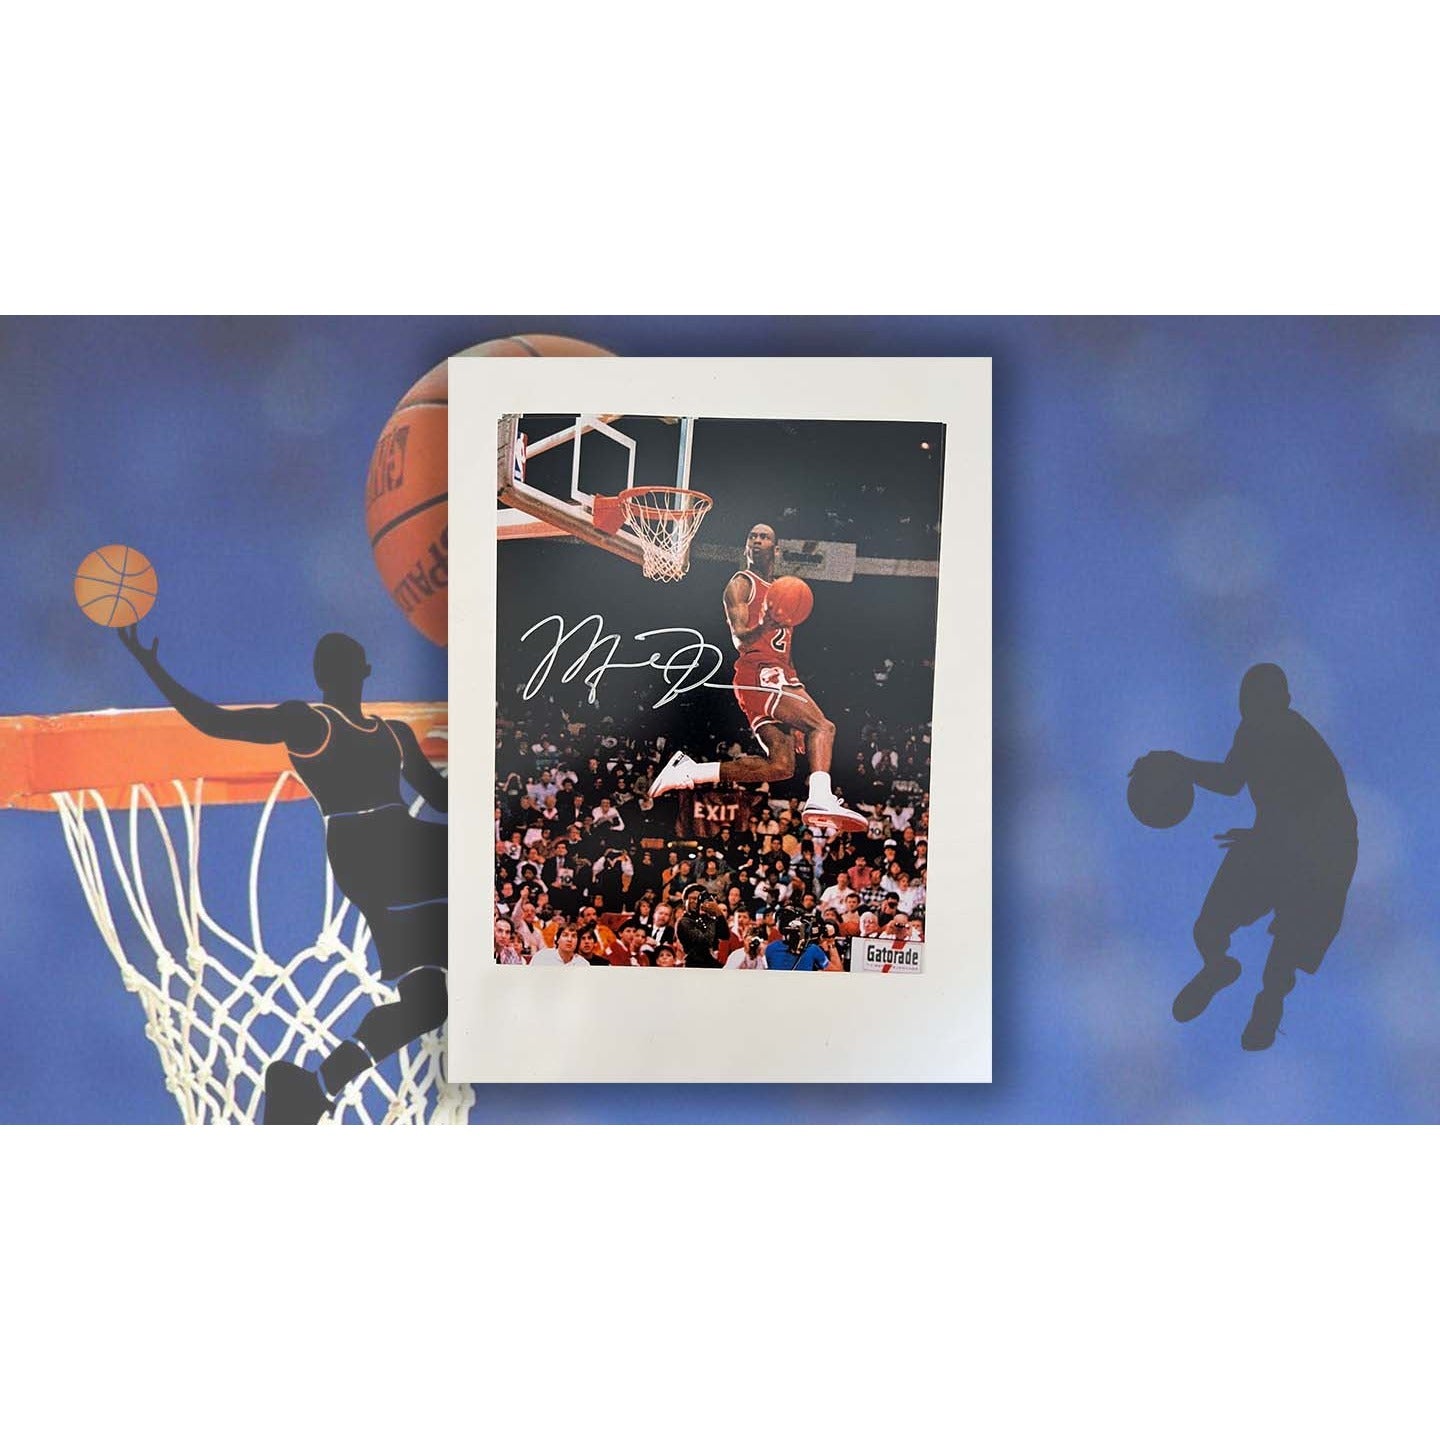 Michael Jordan slam dunk contest 8x10 photo signed with proof